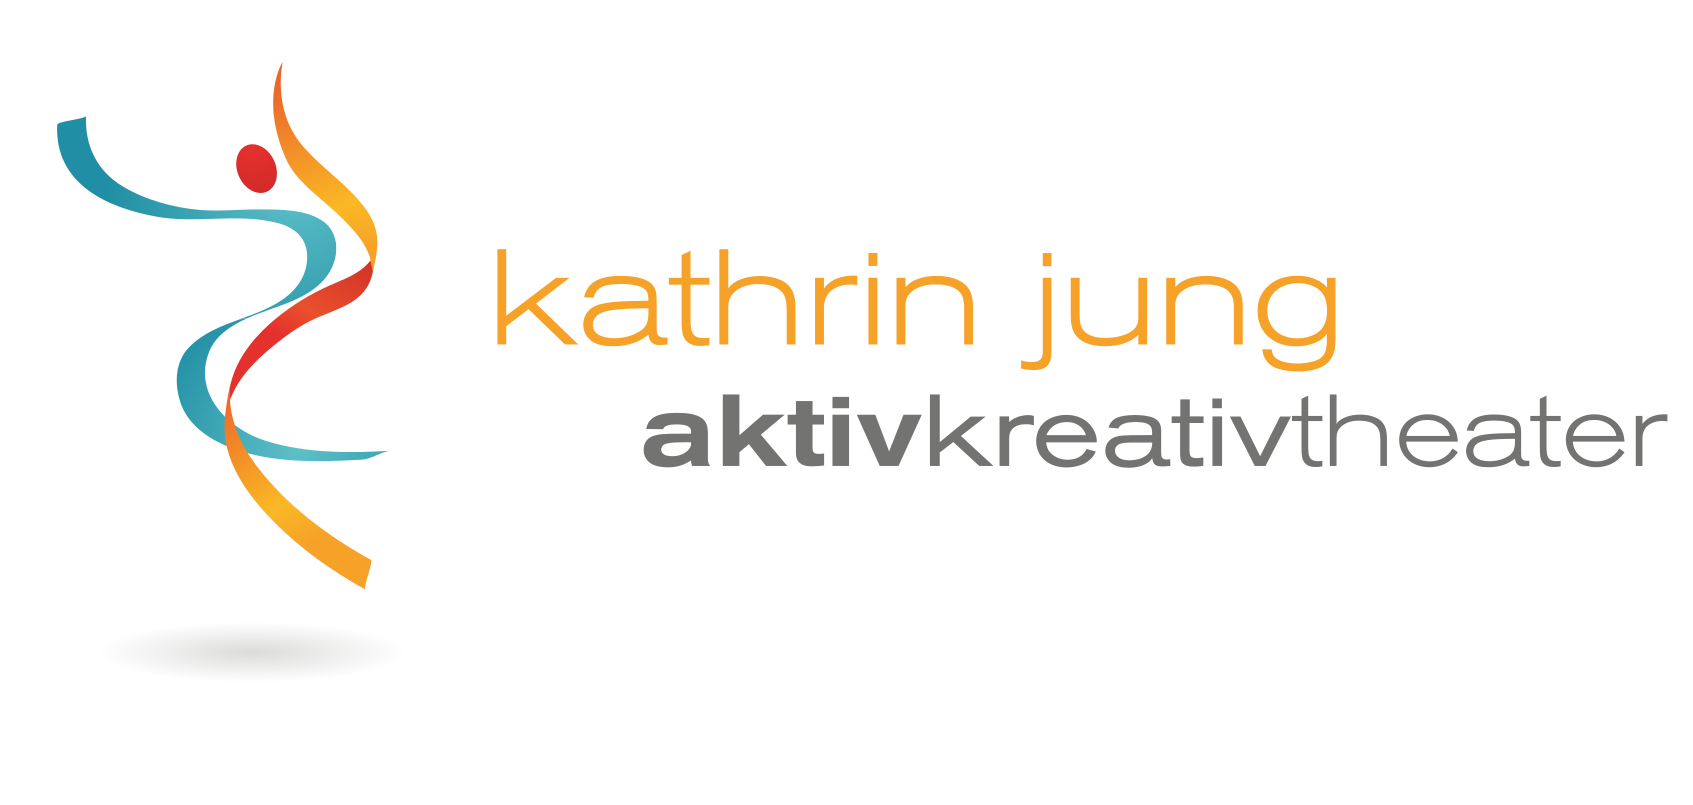 Aktivkreativtheater Logo